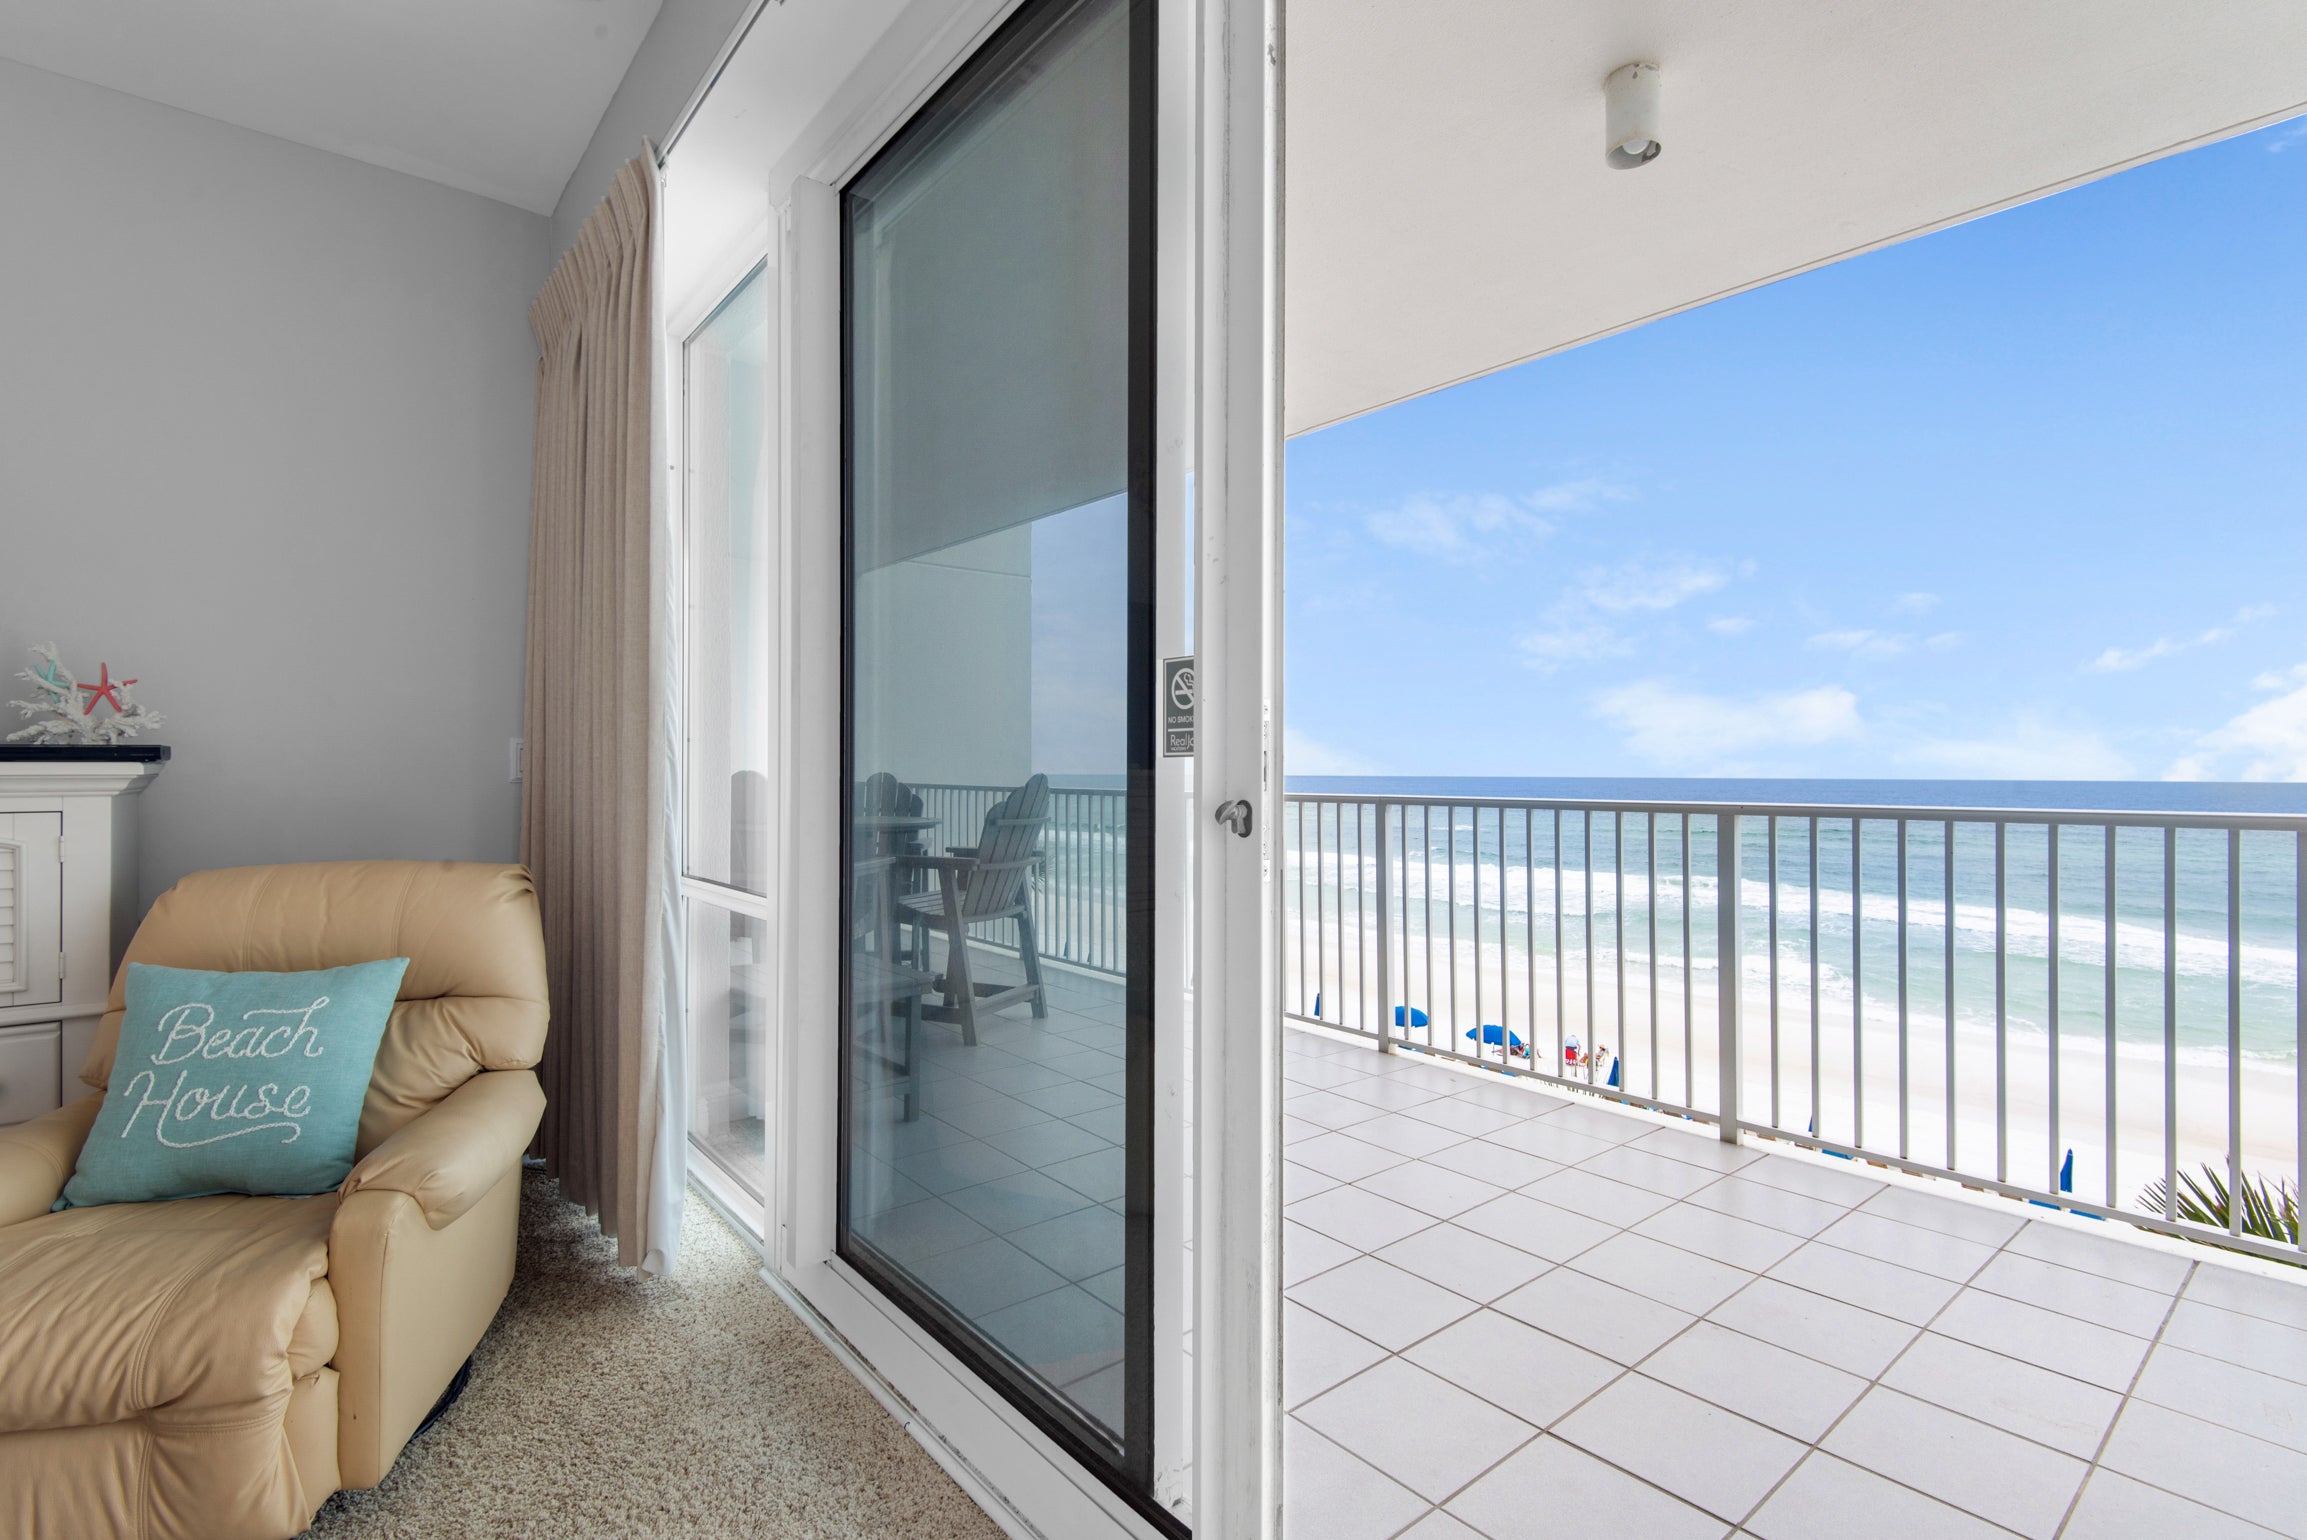 Master Suite has Flatscreen and Balcony access